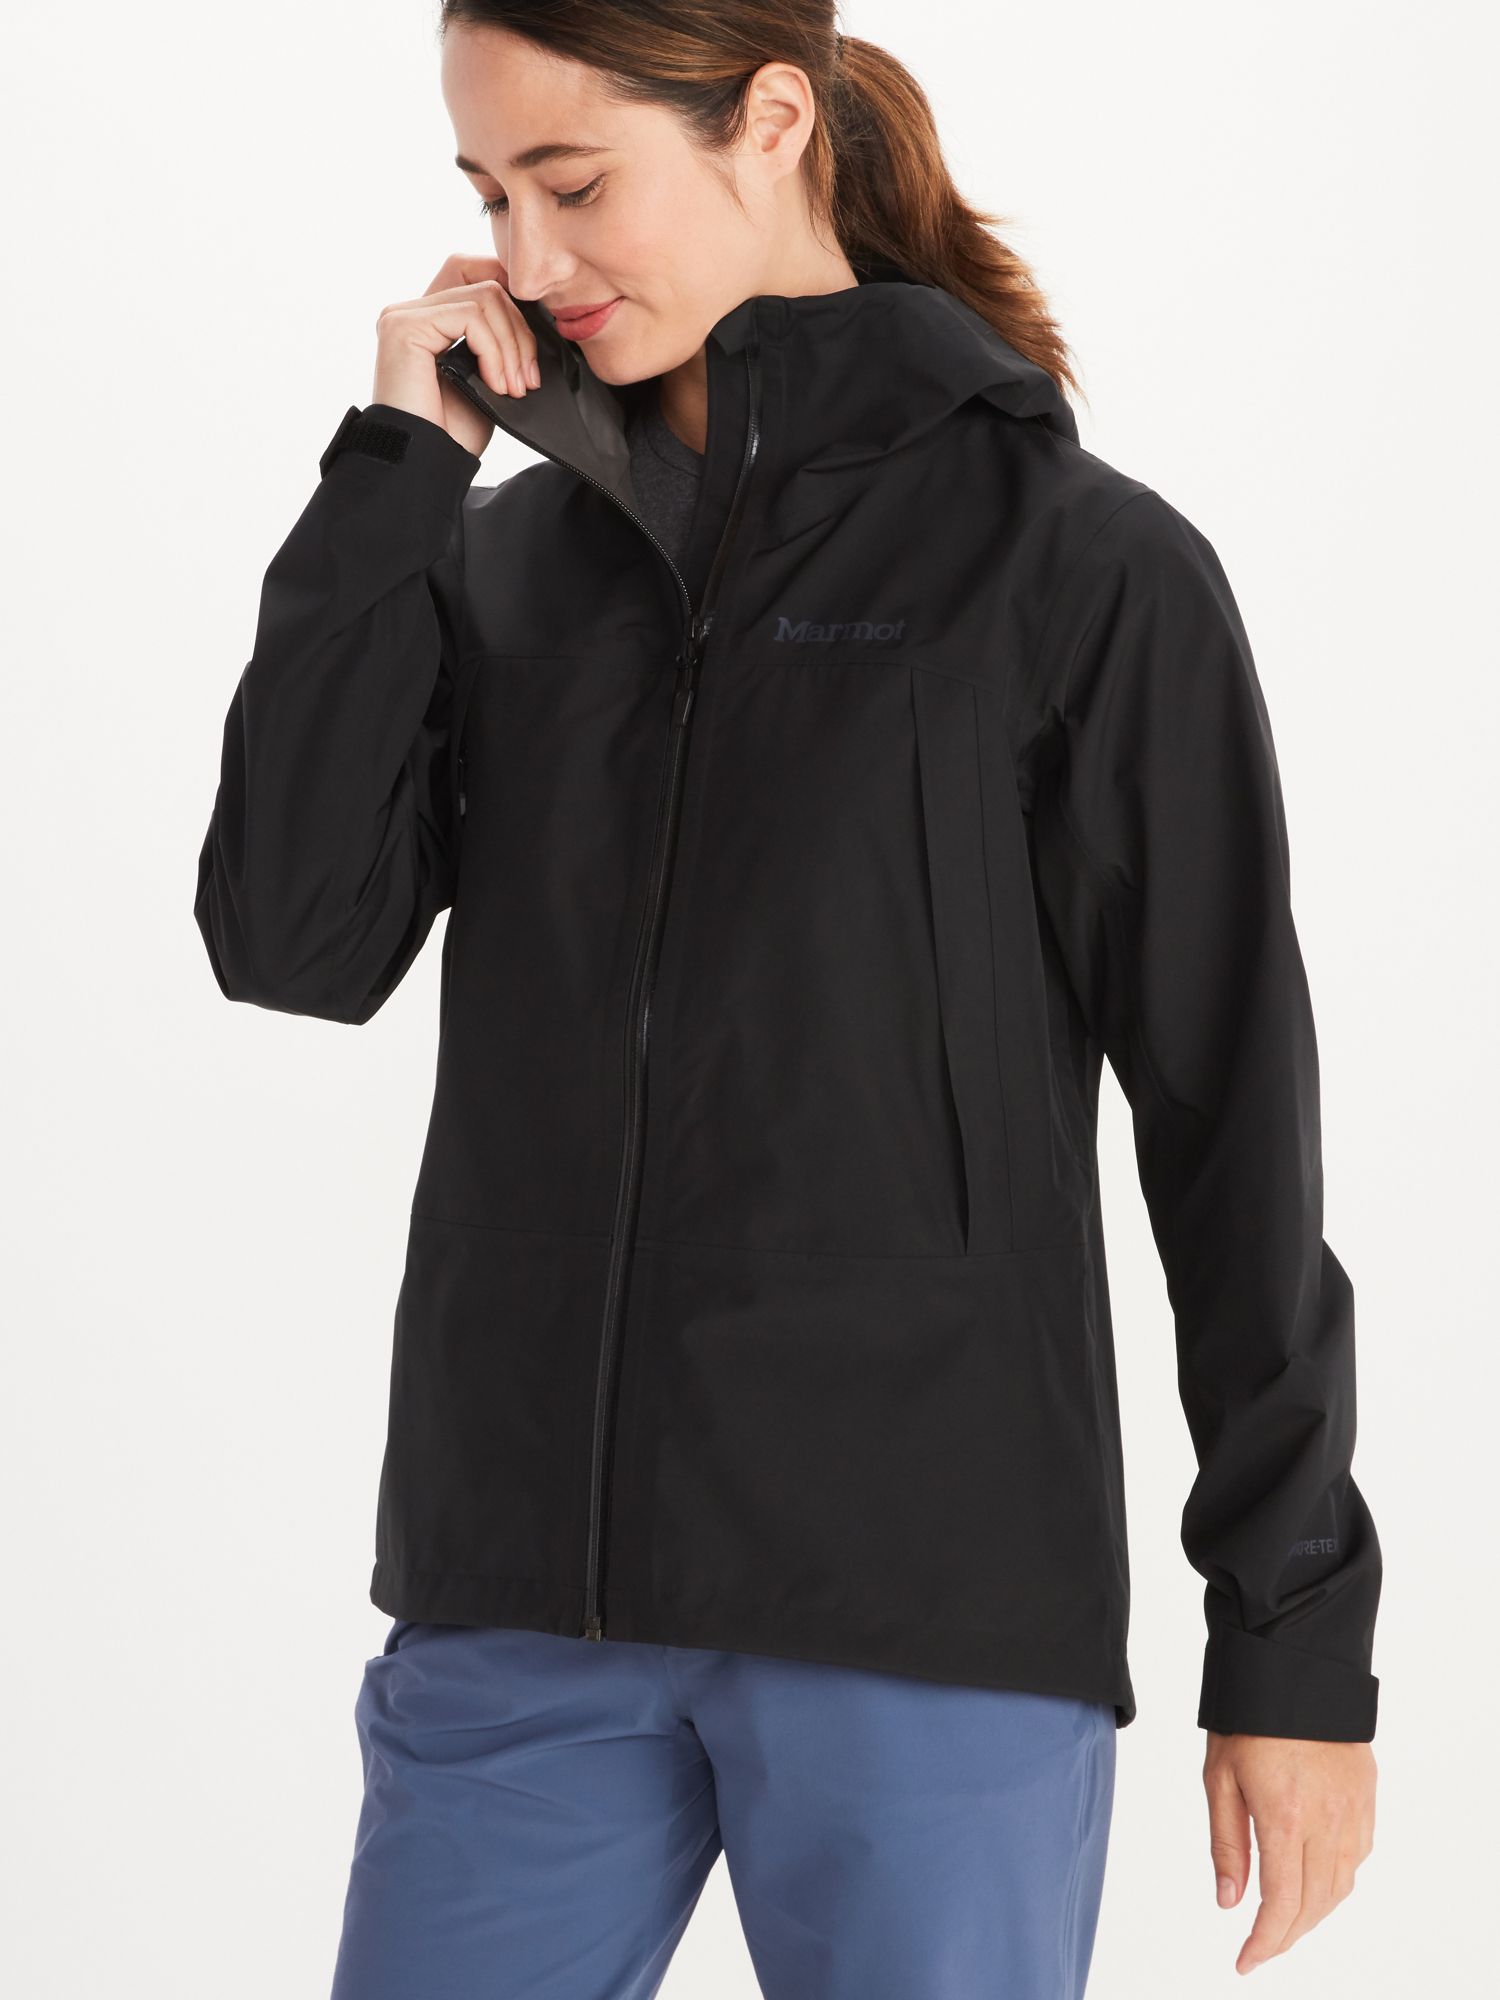 Women's GORE-TEX® Minimalist Pro Jacket | Marmot